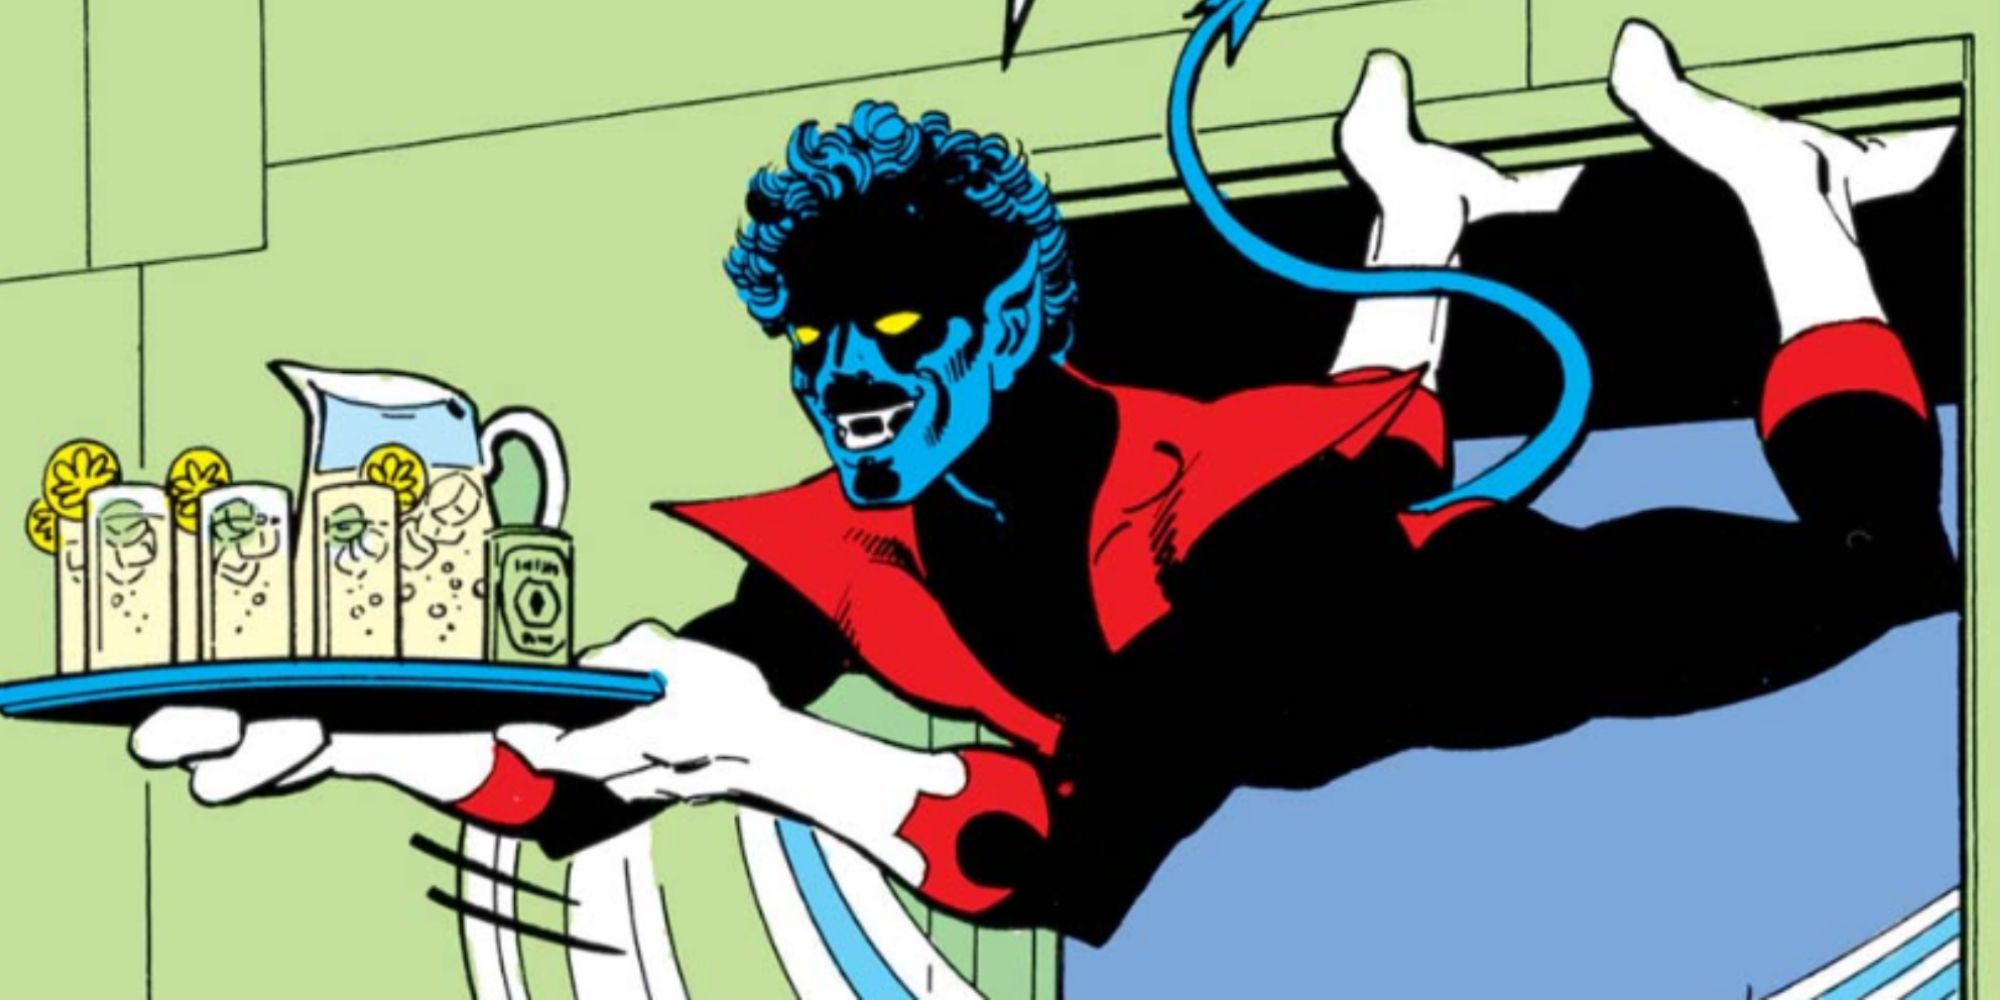 Nightcrawler serves drinks to the X-Men in the comics